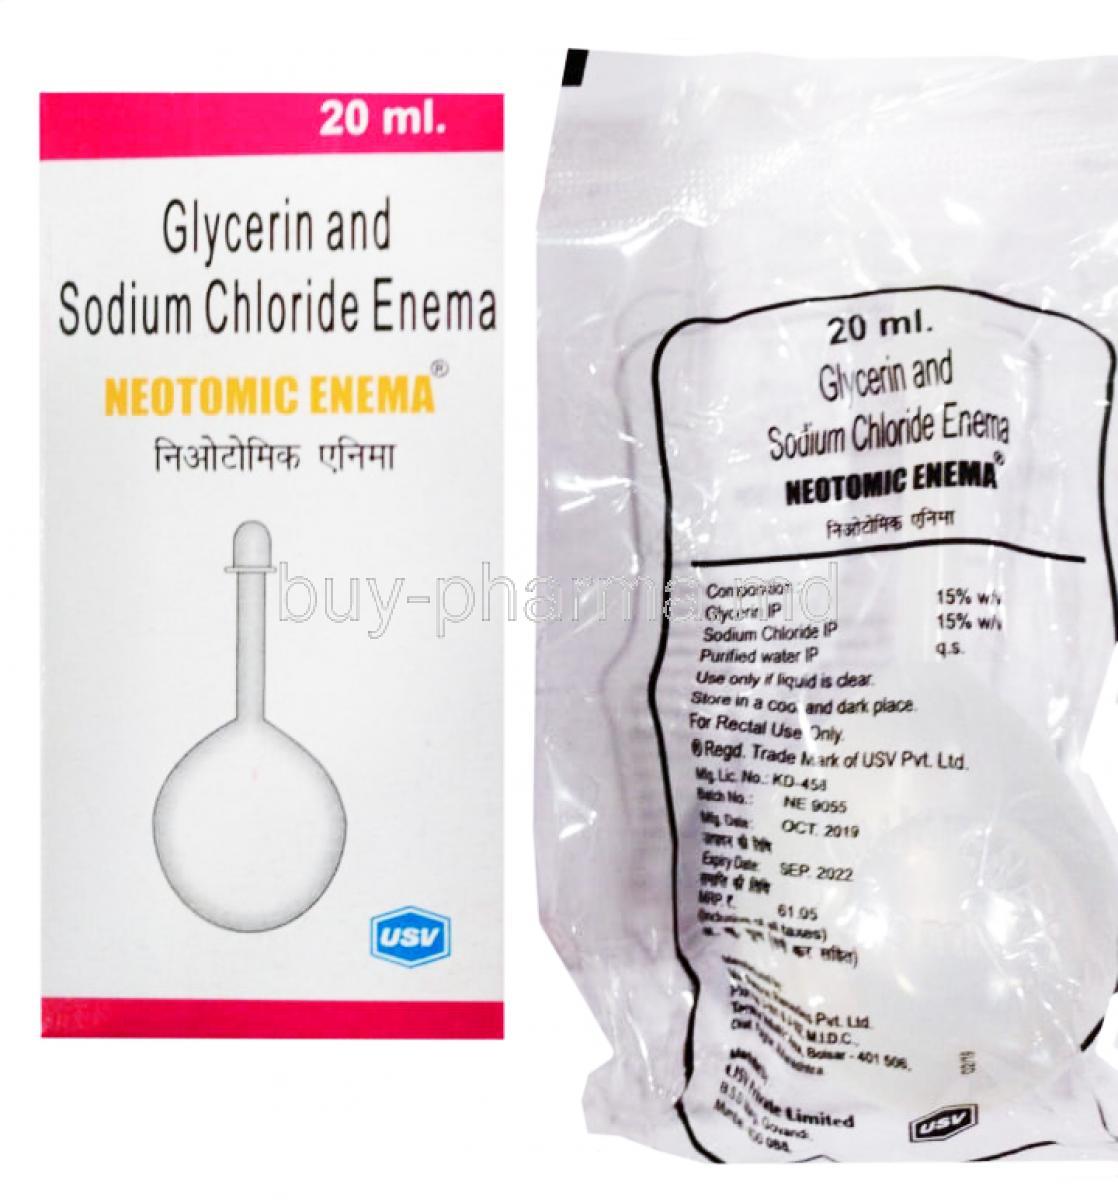 Neotomic Enema Liquid, Glycerin 15% w/v/ Sodium Chloride 15% w/v, box insert packaging front presentation